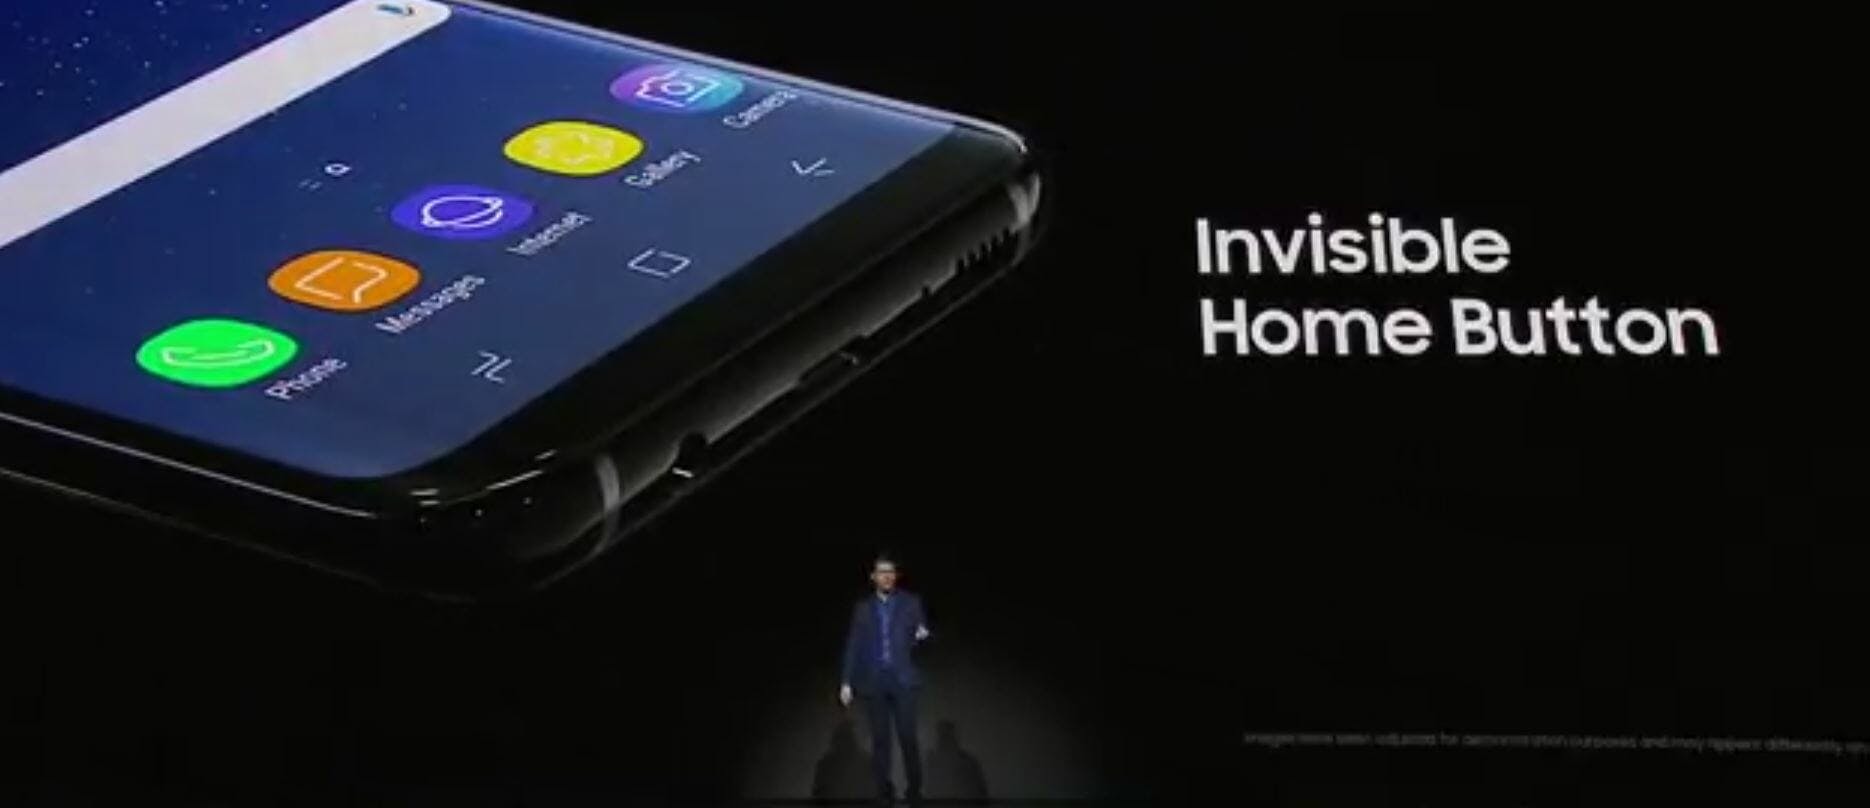 Samsung Galaxy S8 invisible home button